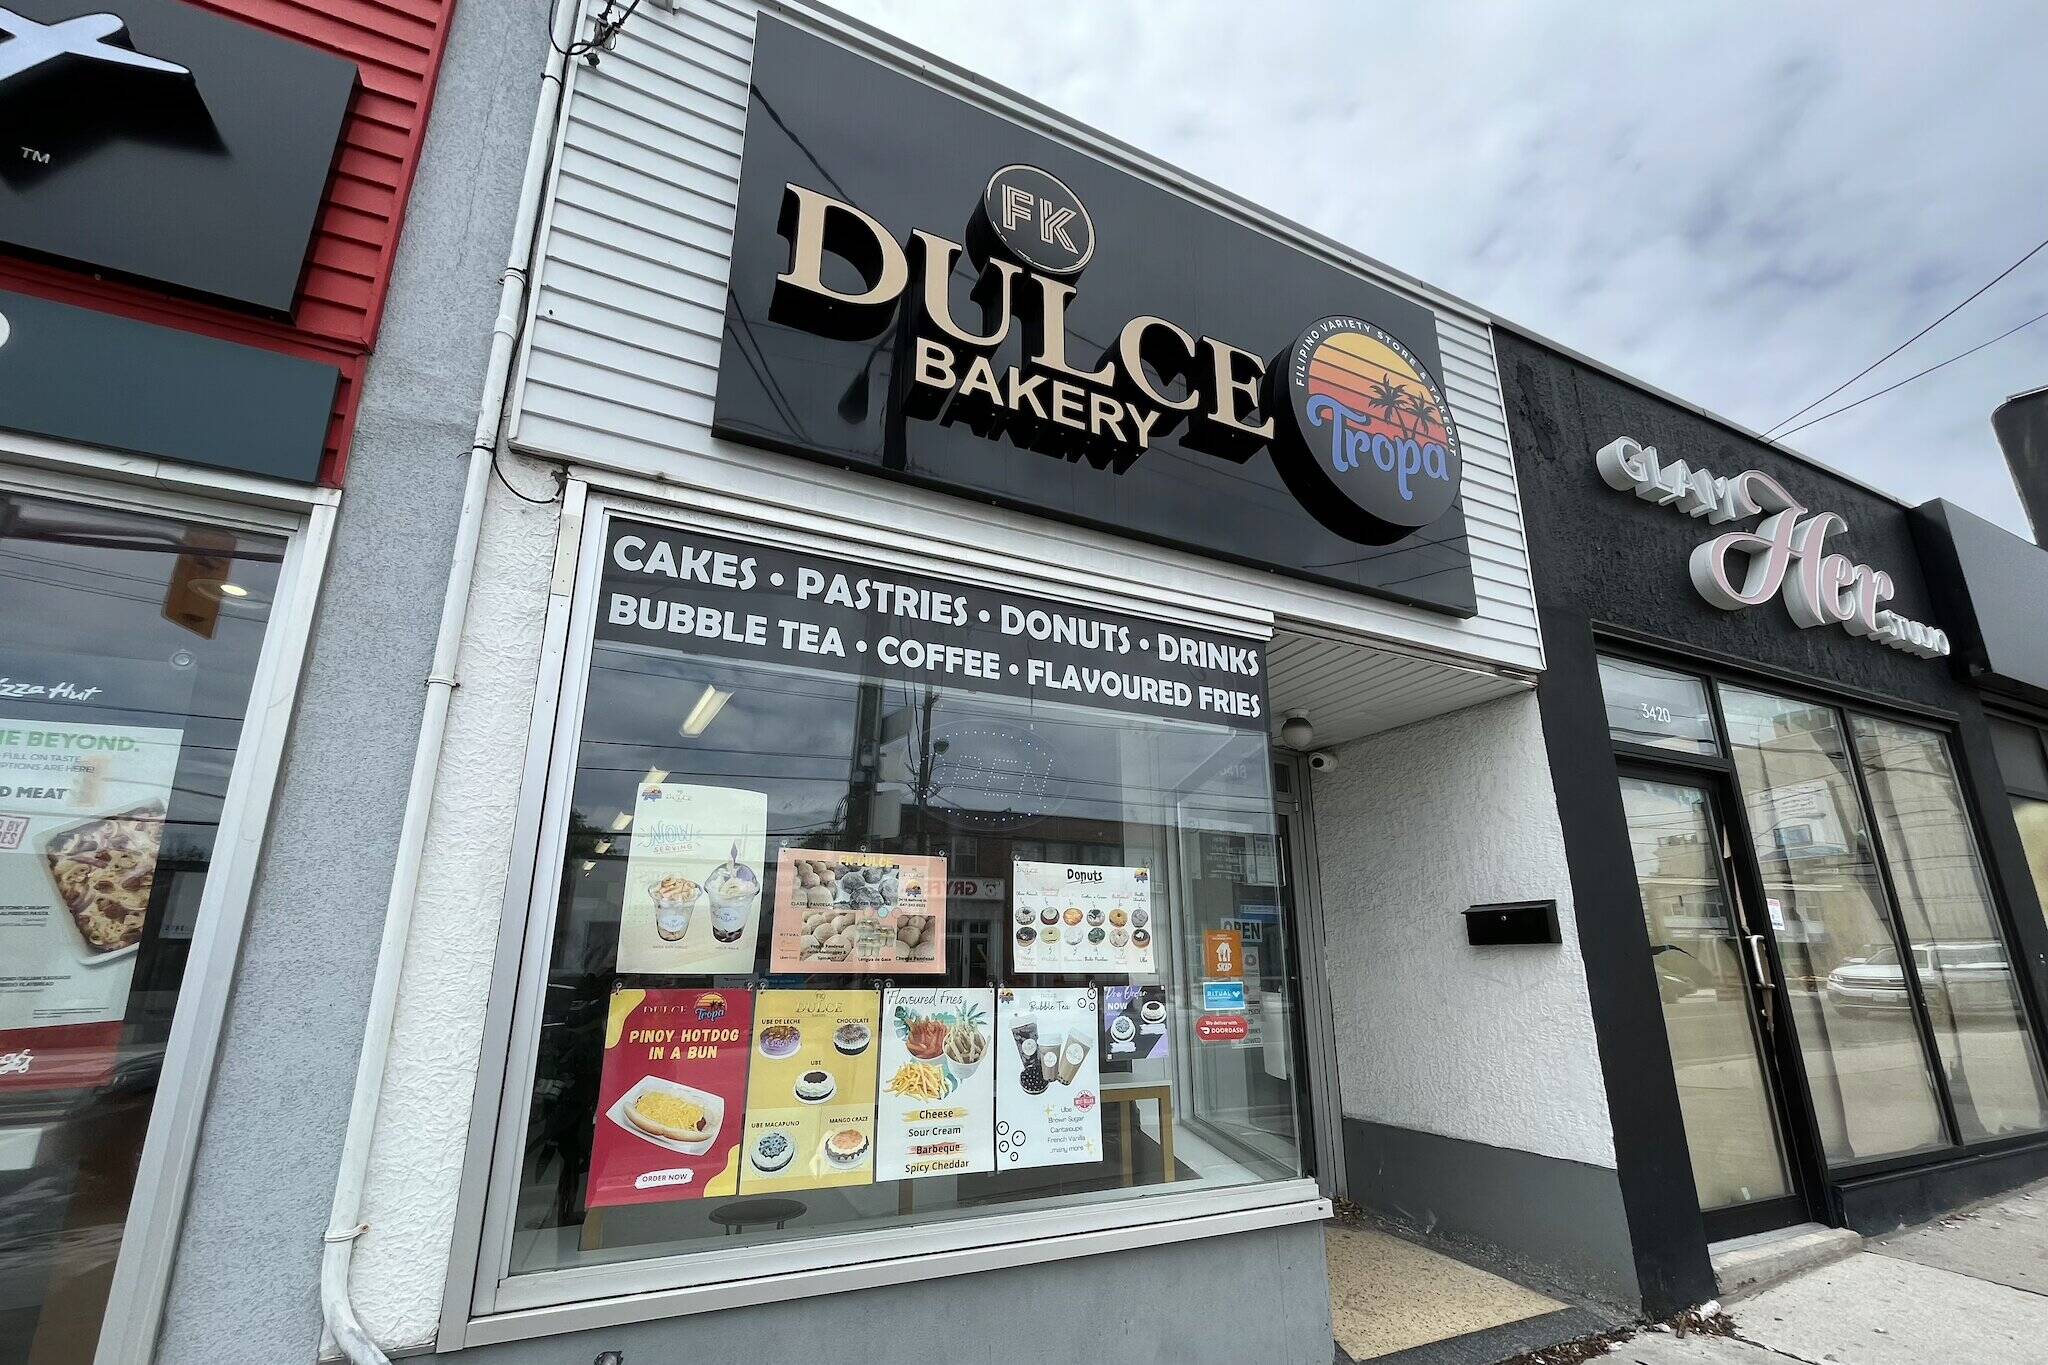 FK Dulce Bakery Toronto